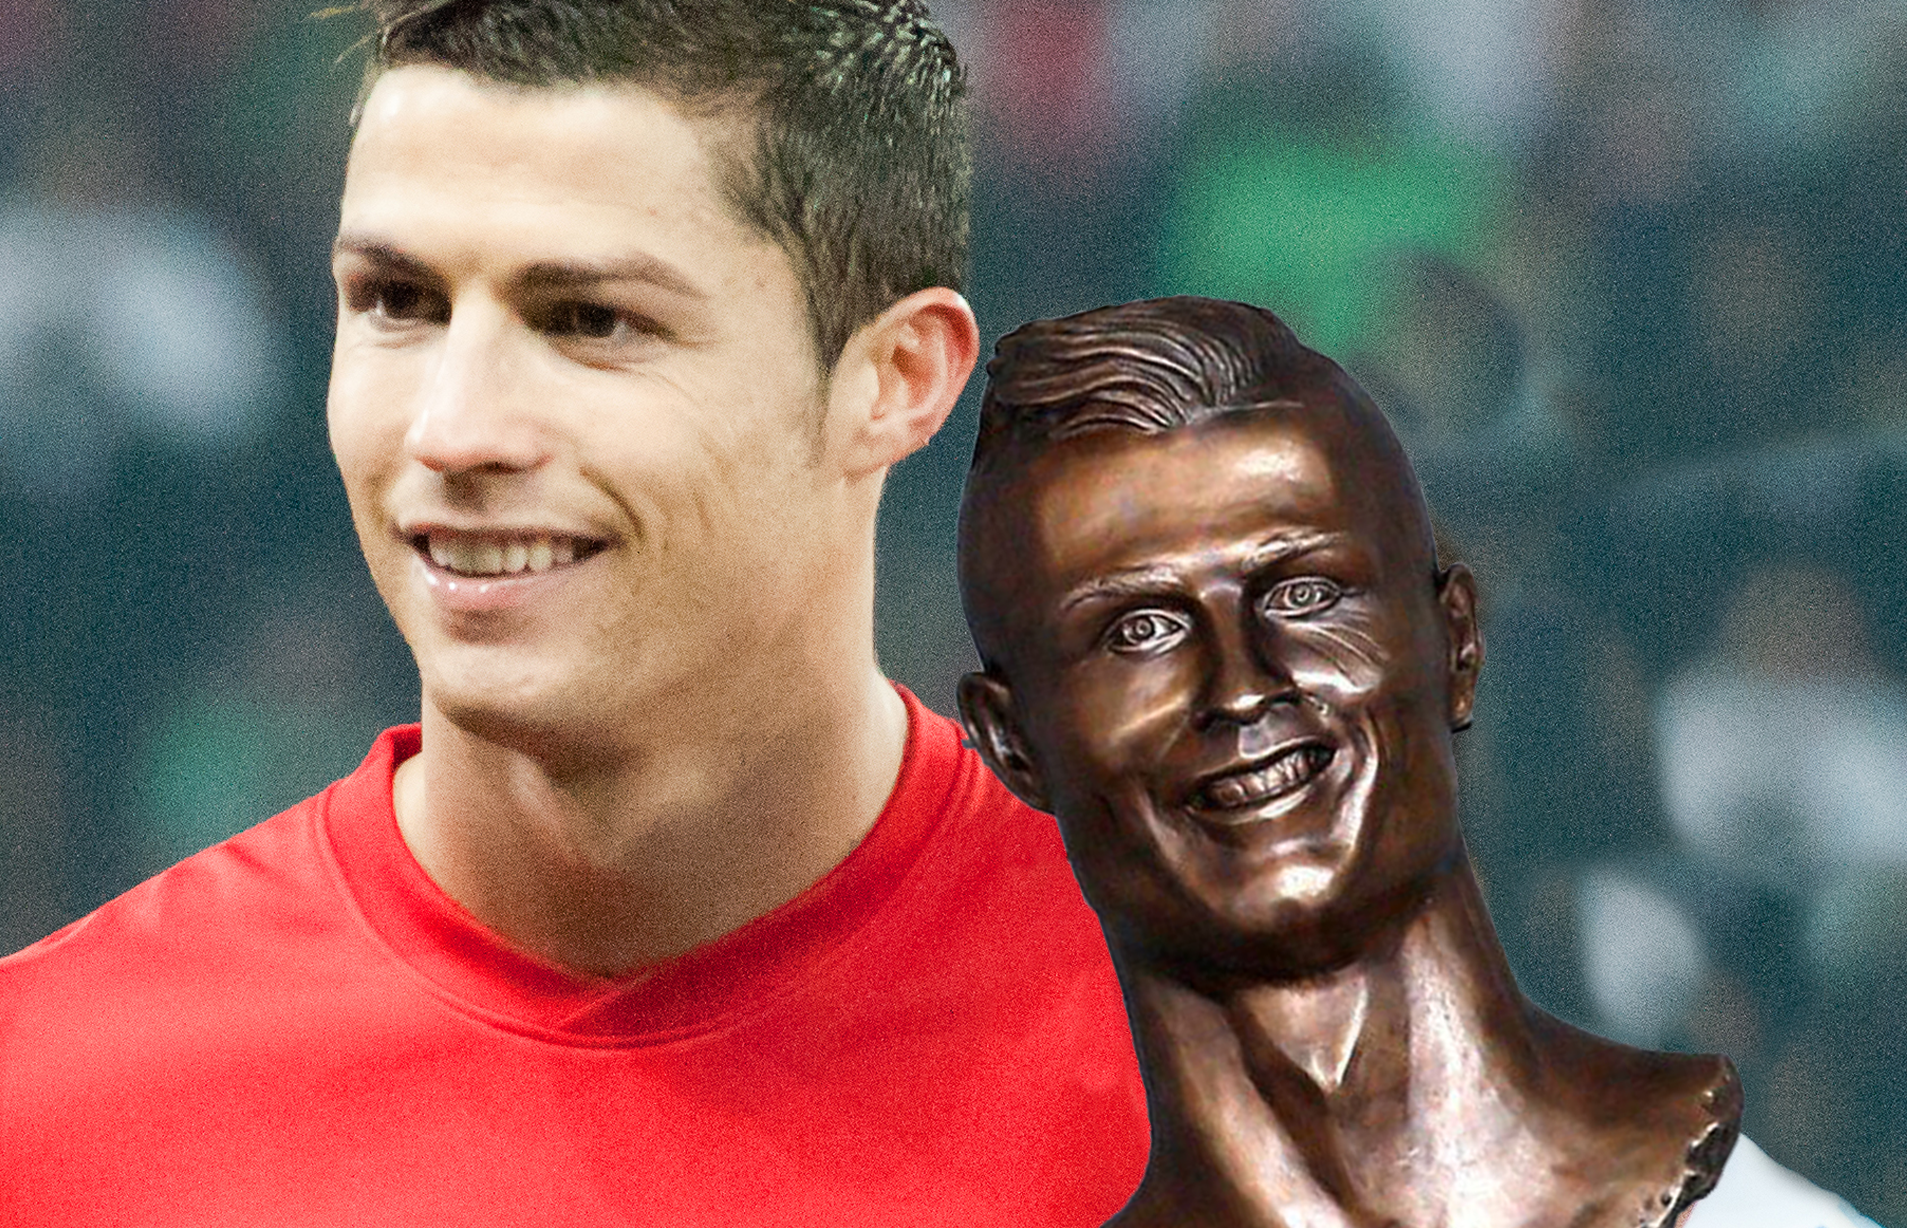 Ronaldo and his statue